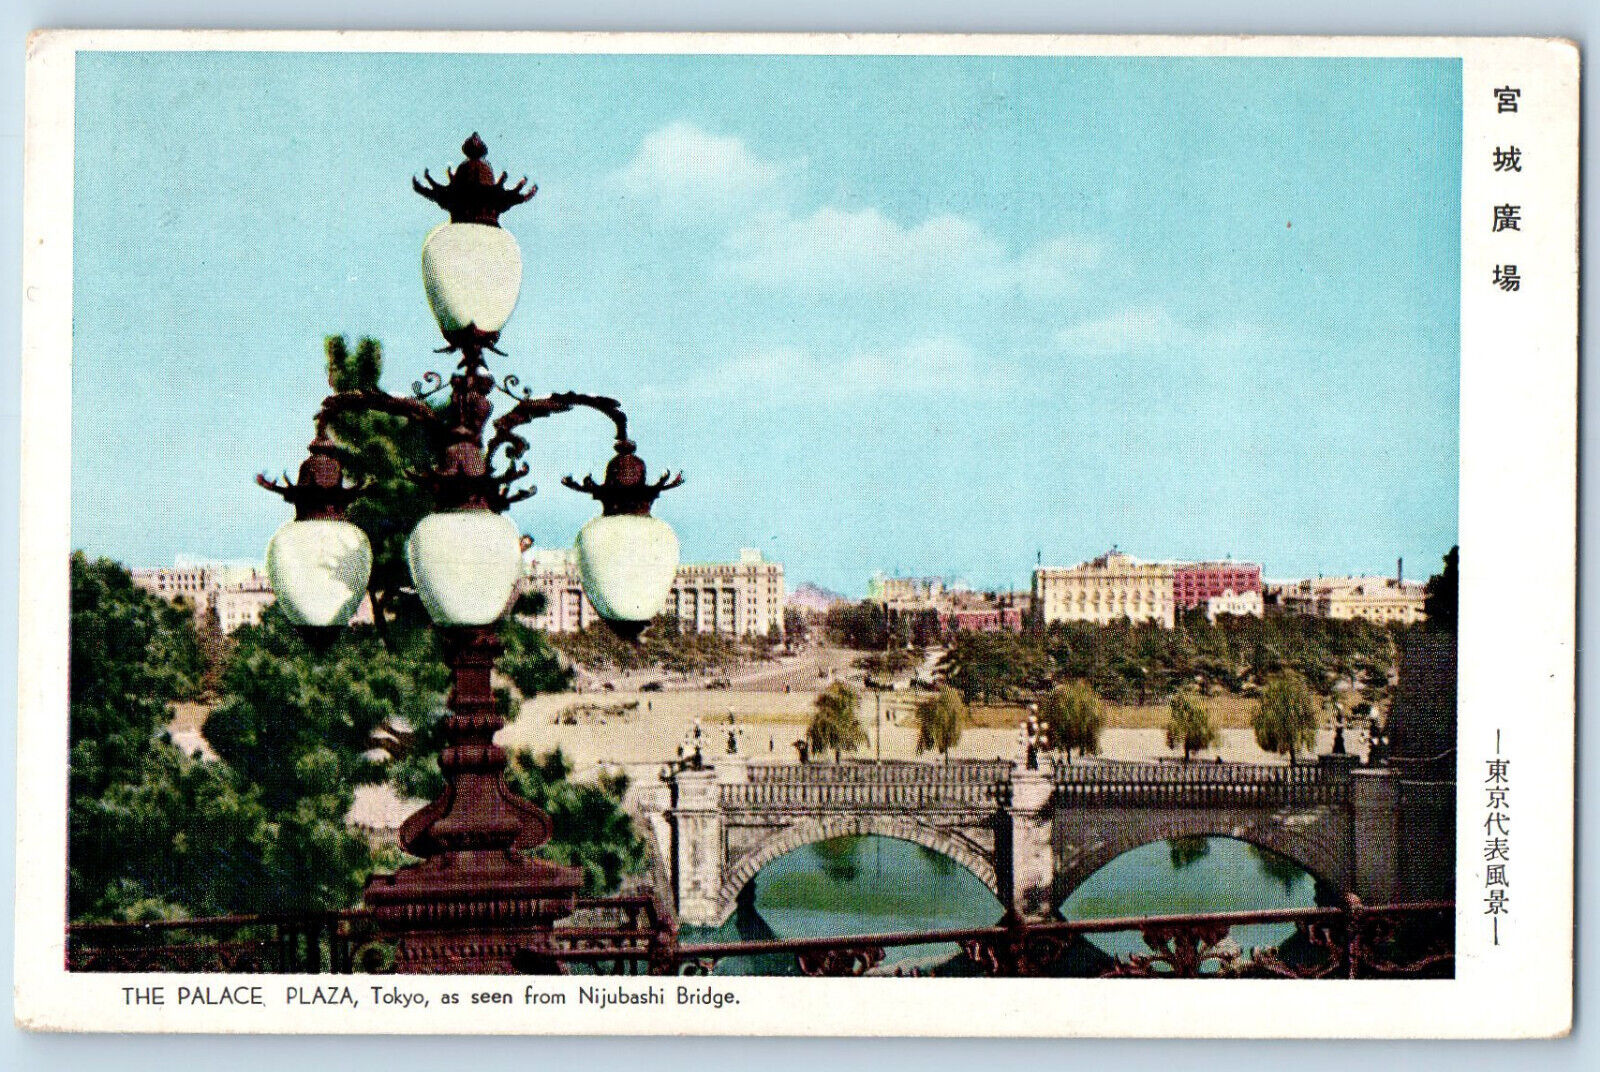 Tokyo Japan Postcard Palace Plaza Tokyo from Nijubashi Bridge c1930's